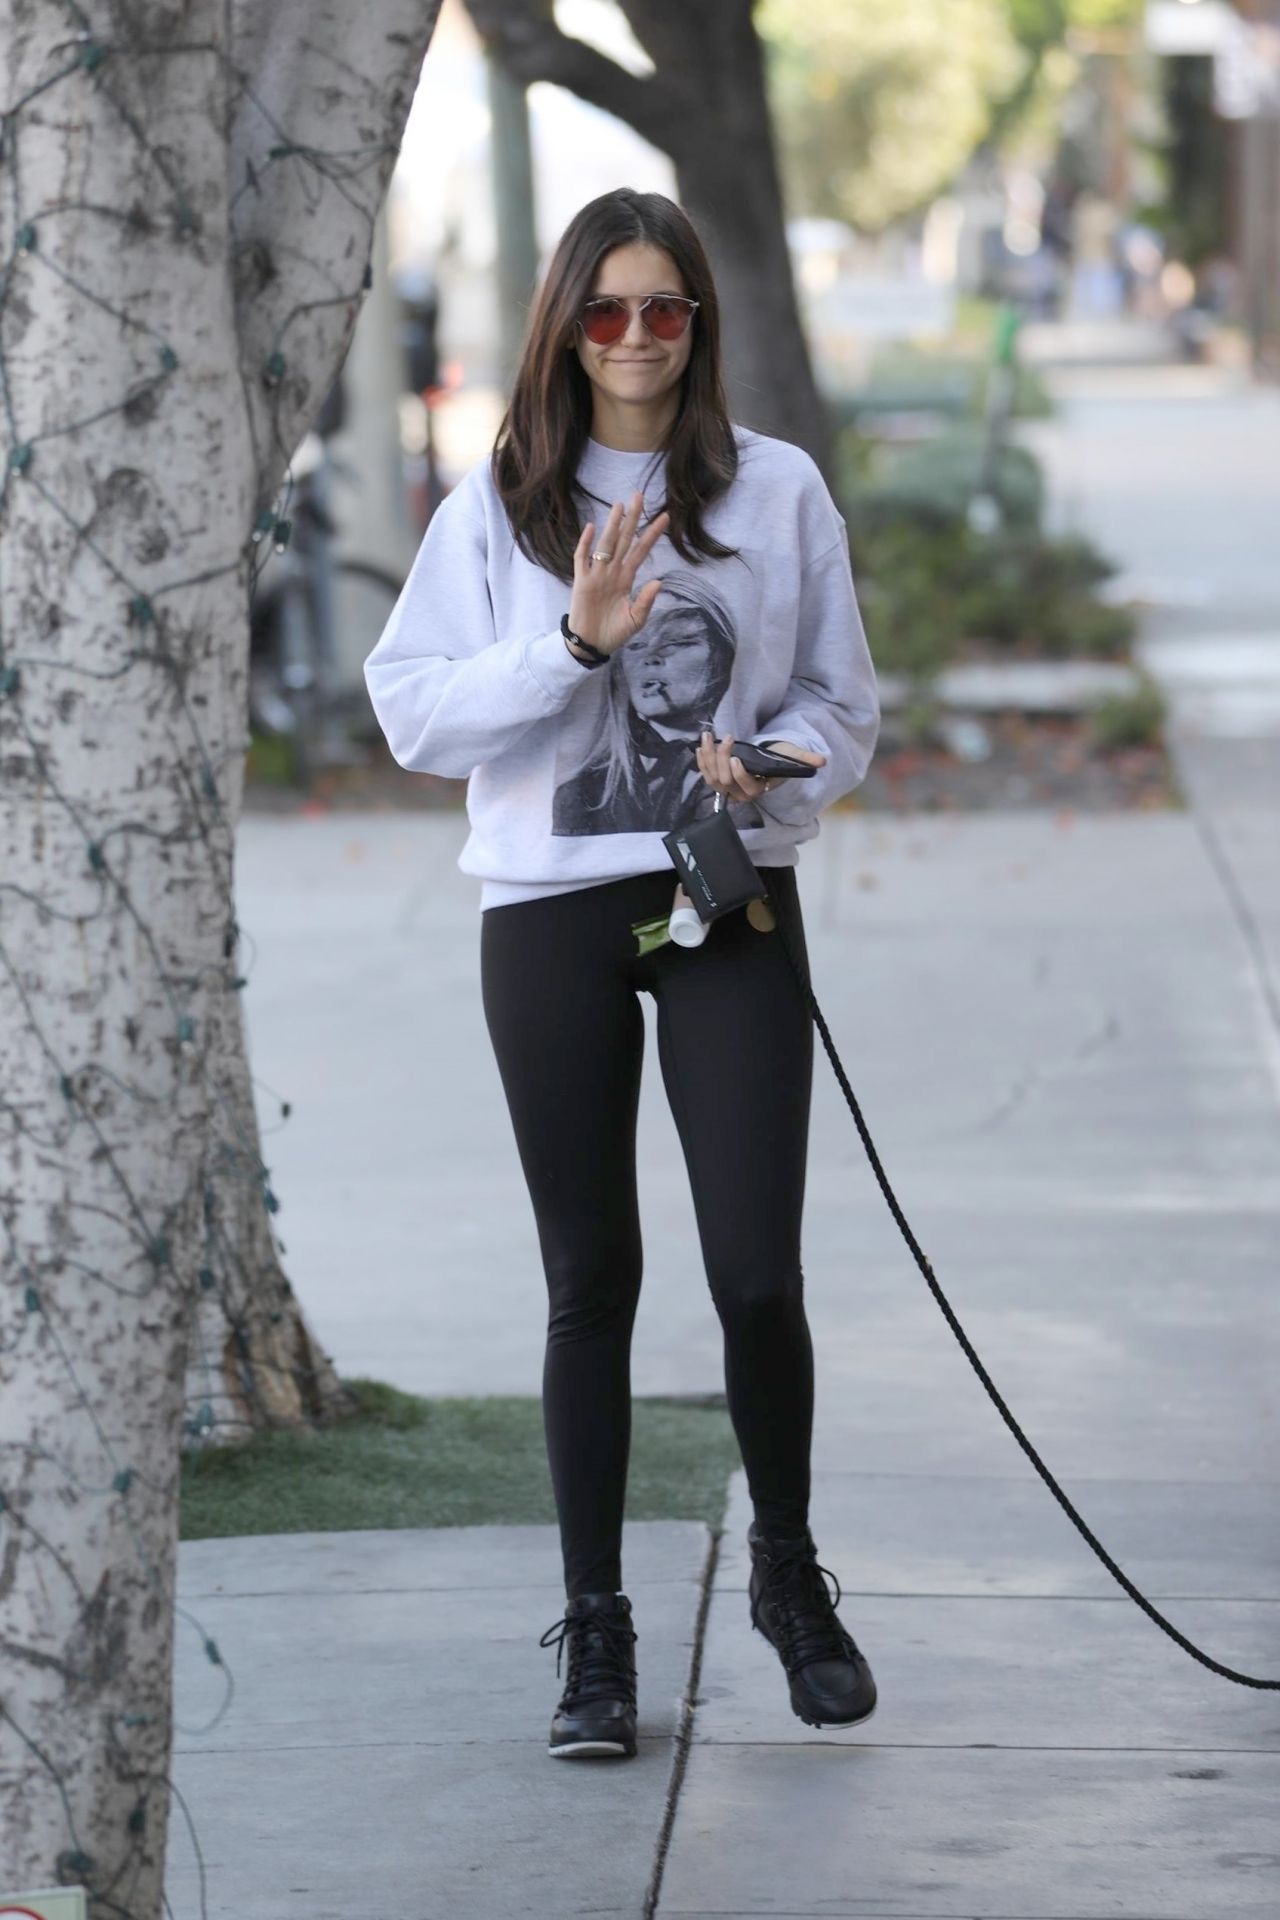 Nina Dobrev West Hollywood August 27, 2021 – Star Style